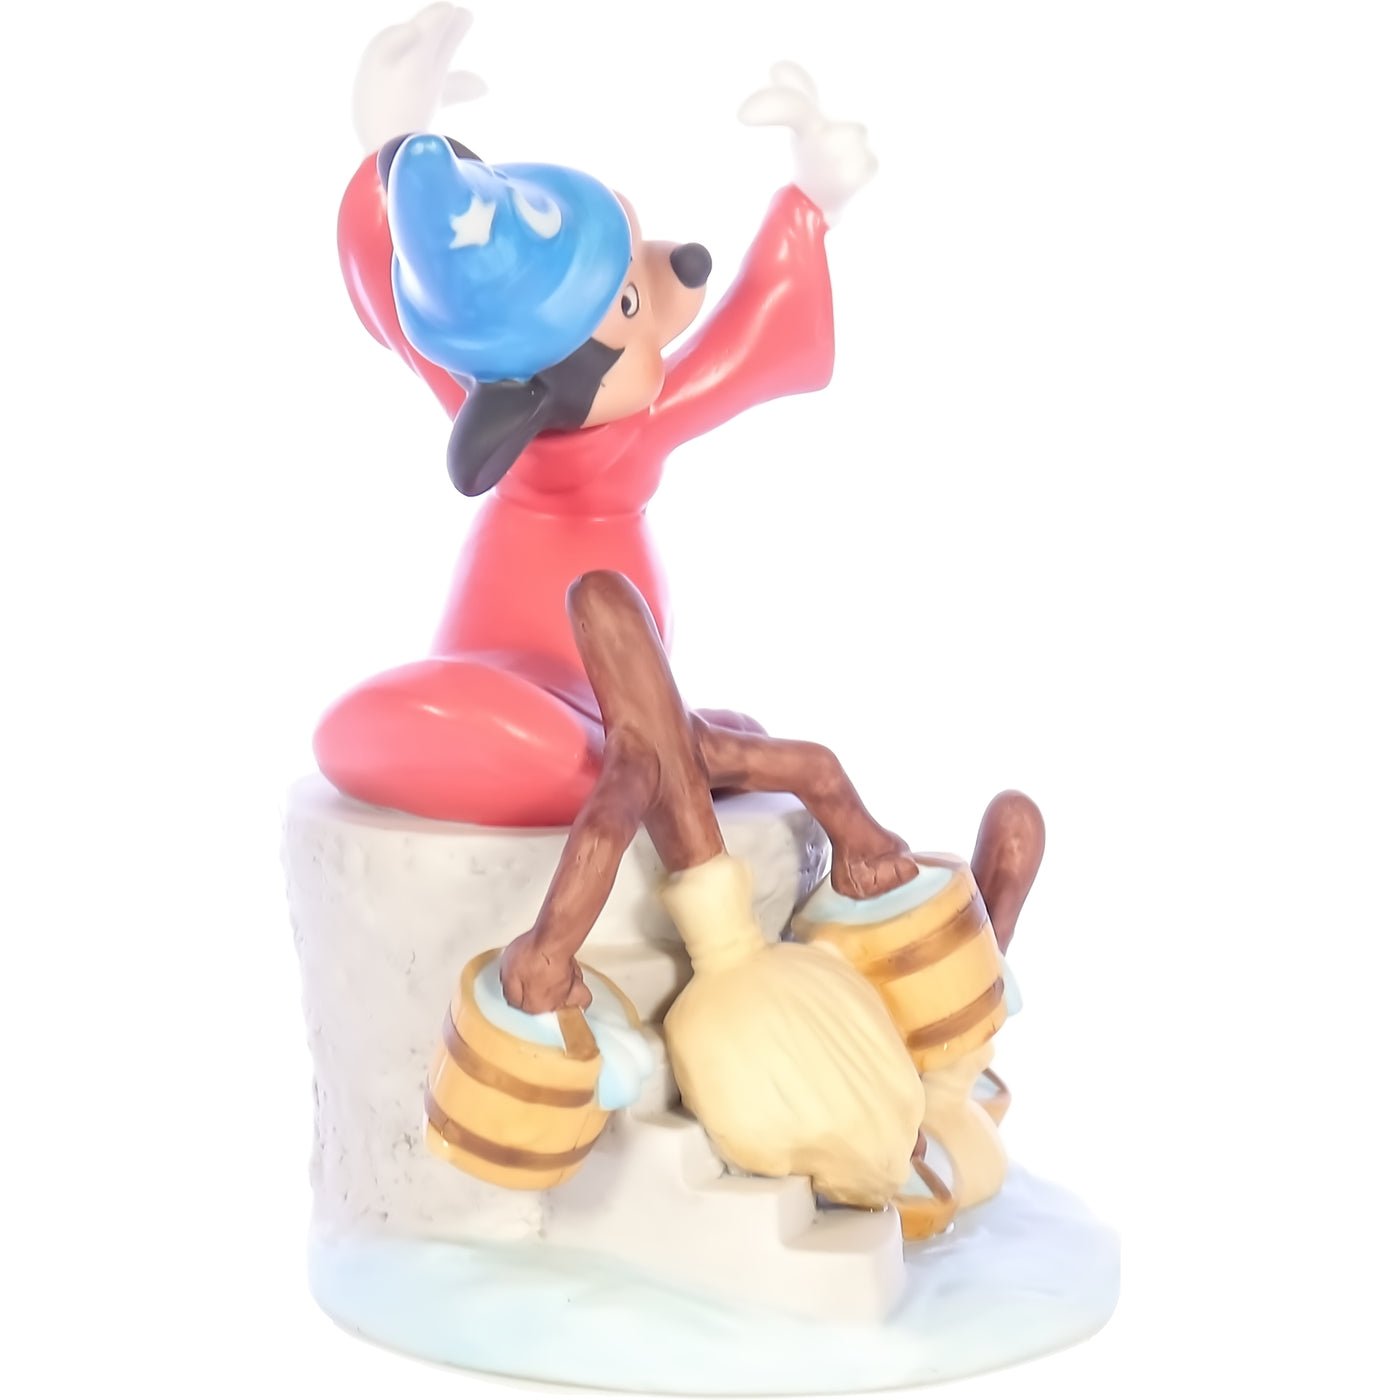 Disney's Magic Memories Porcelain Figurine Limited Edition Fantasia 1980 6.75"